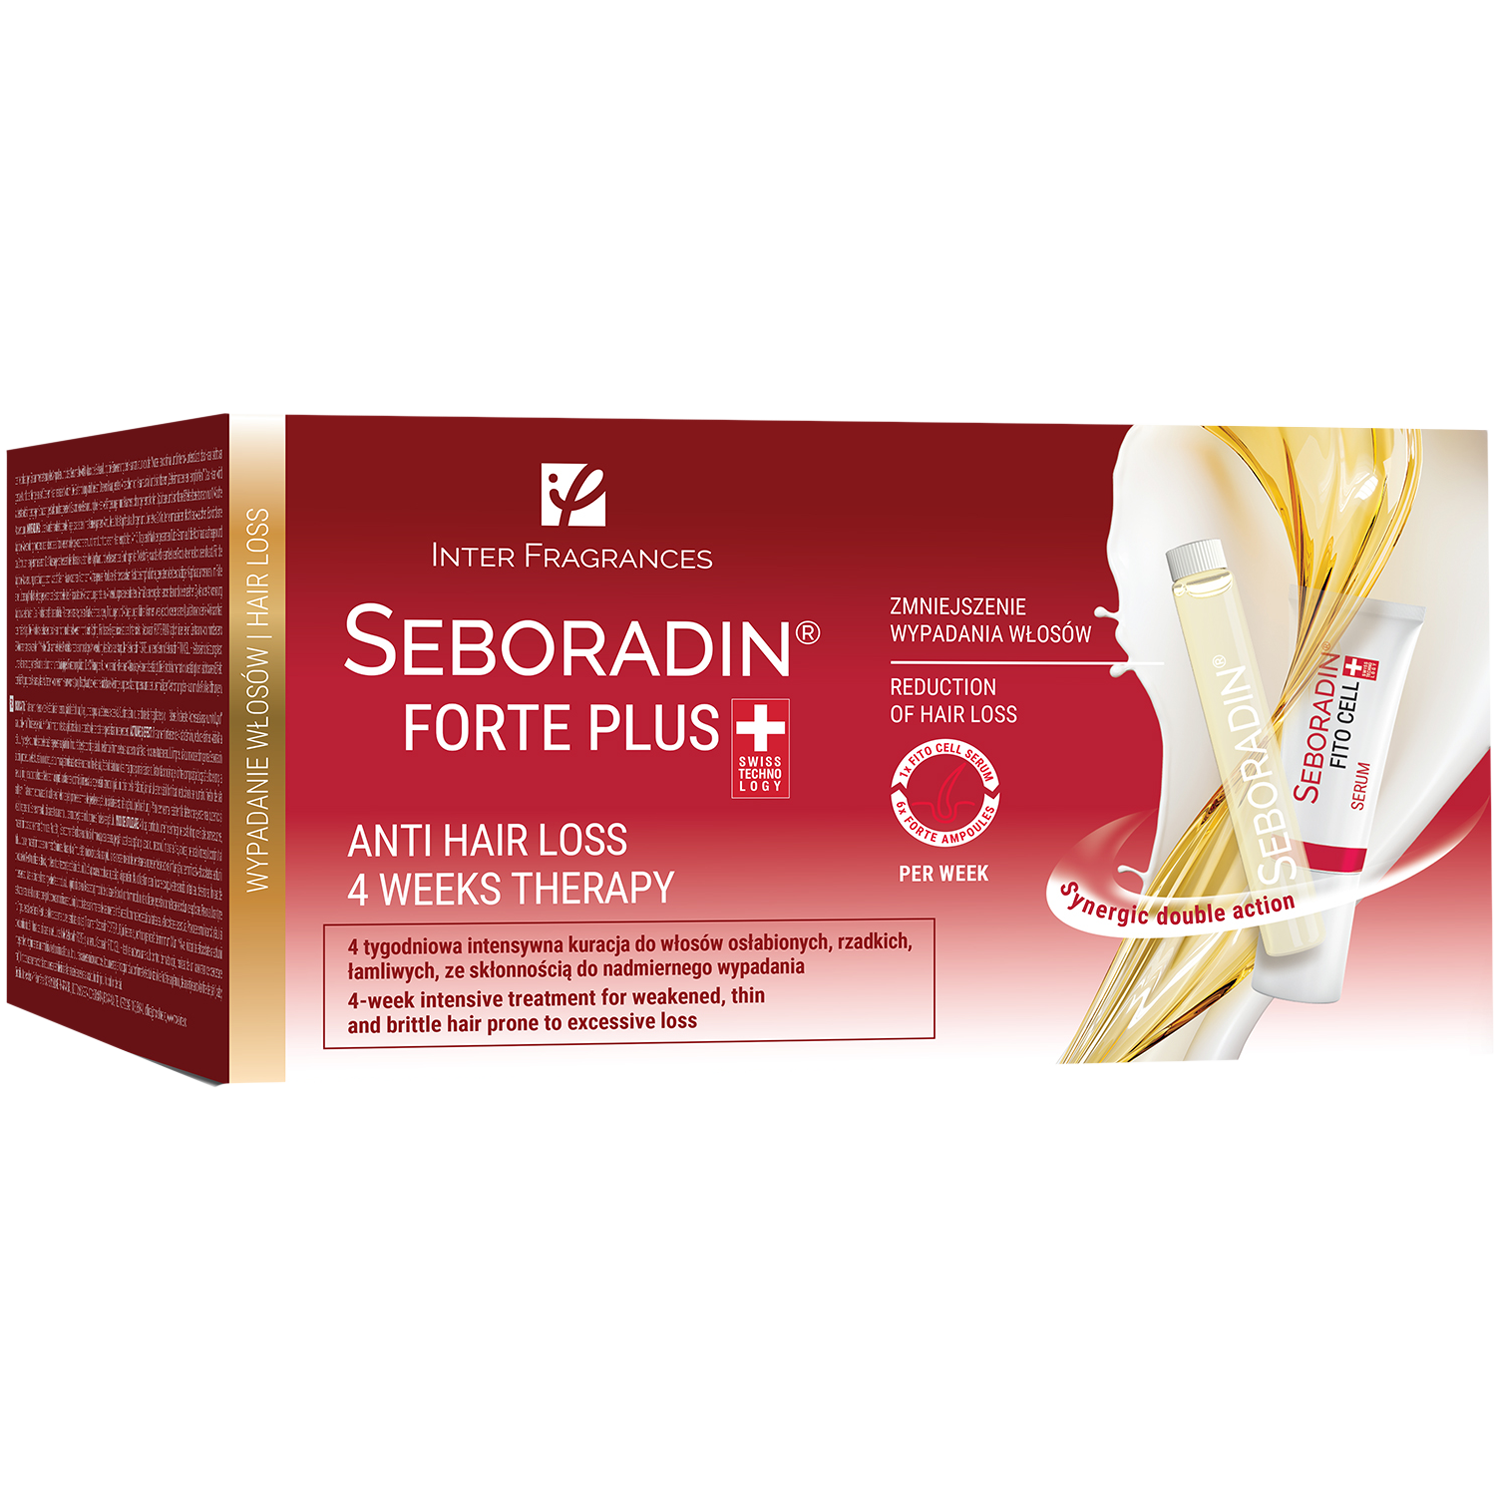 Seboradin Forte Plus набор: ампулы для волос, 24x5,5 мл + сыворотка для волос, 4x6 г